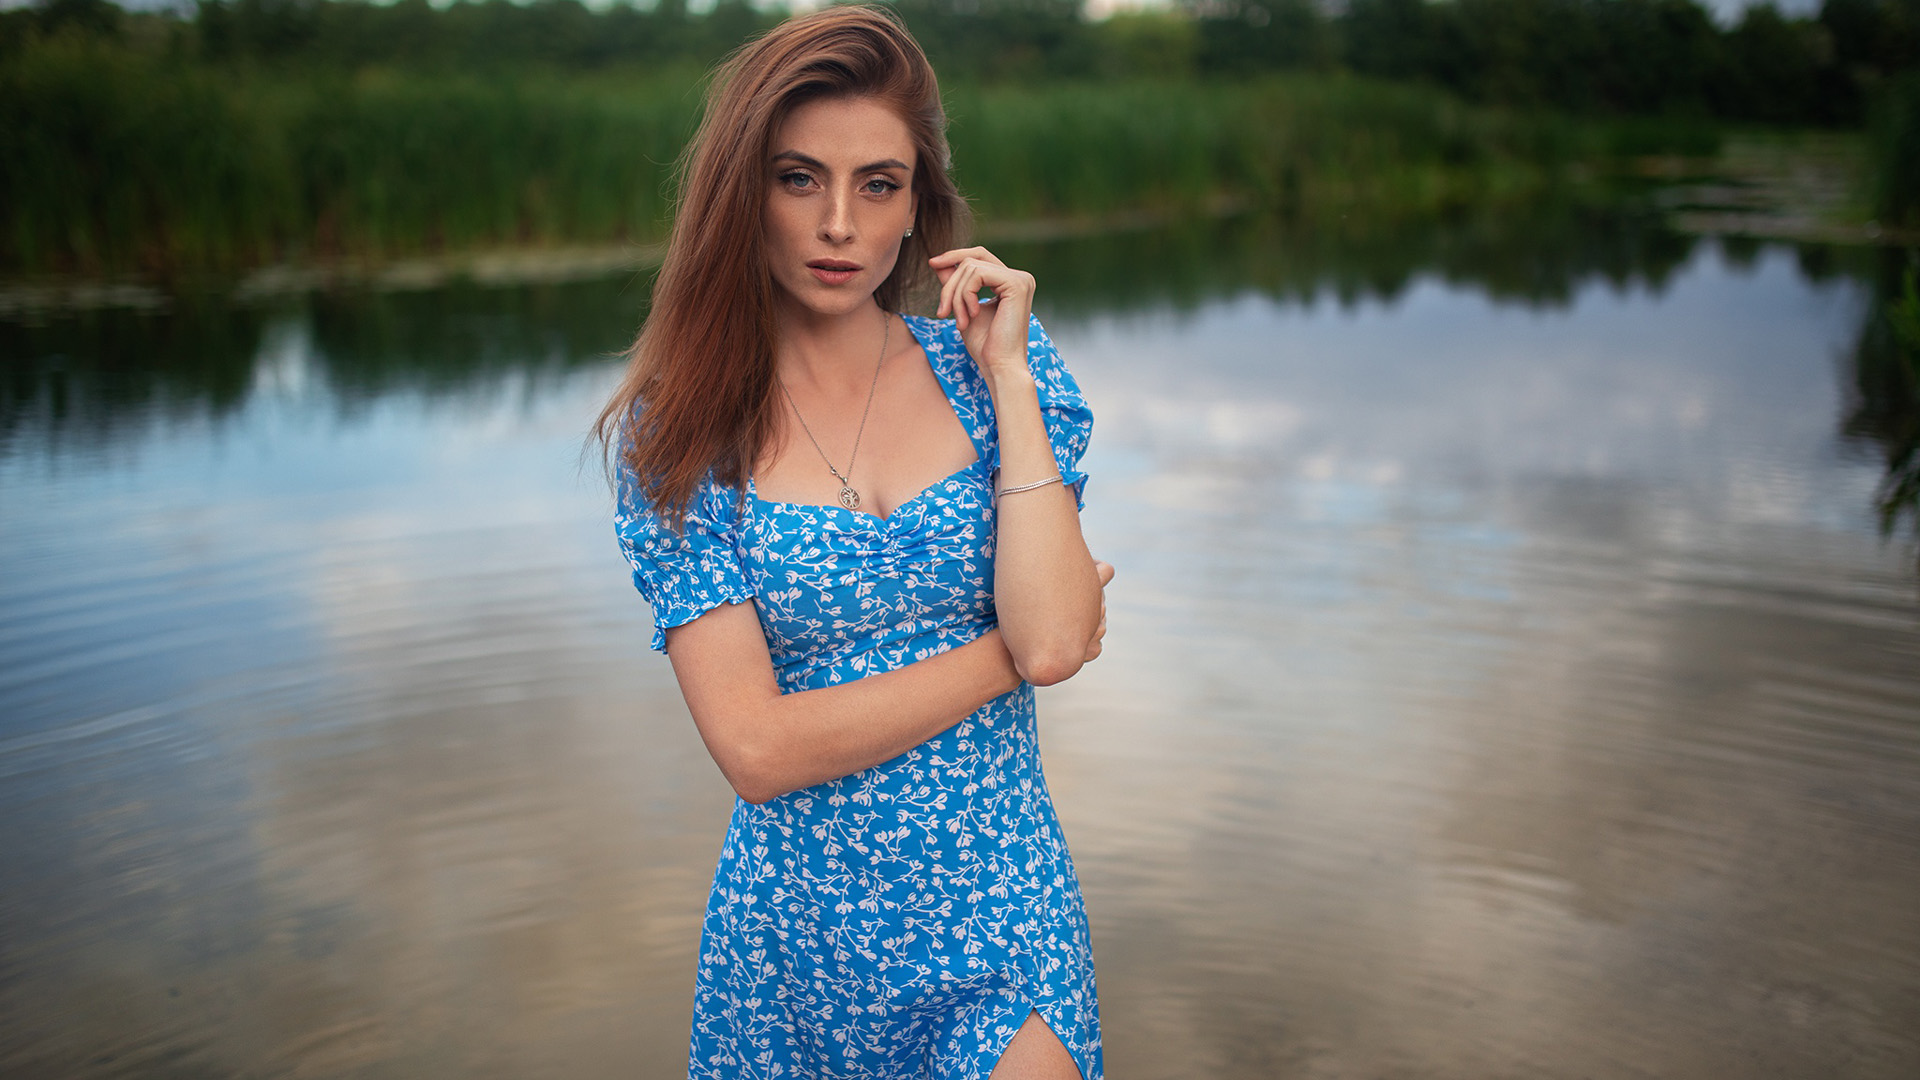 Blonde Girl Model Is Wearing Flowers Printed Blue Dress In River Wallpaper 2K Girls